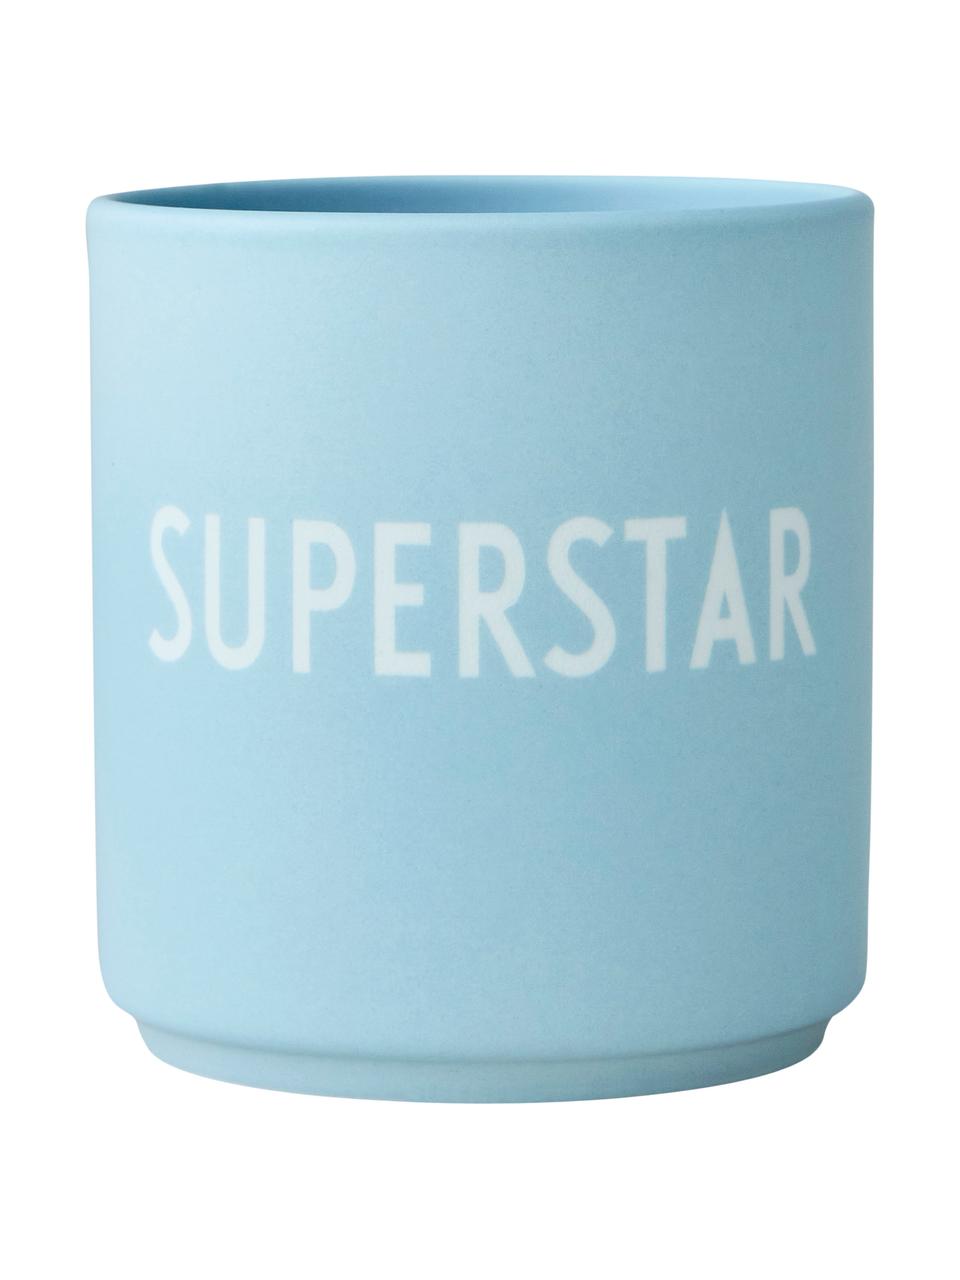 Bol design avec lettrage Favourite SUPERSTAR, Bleu ciel, mat, blanc